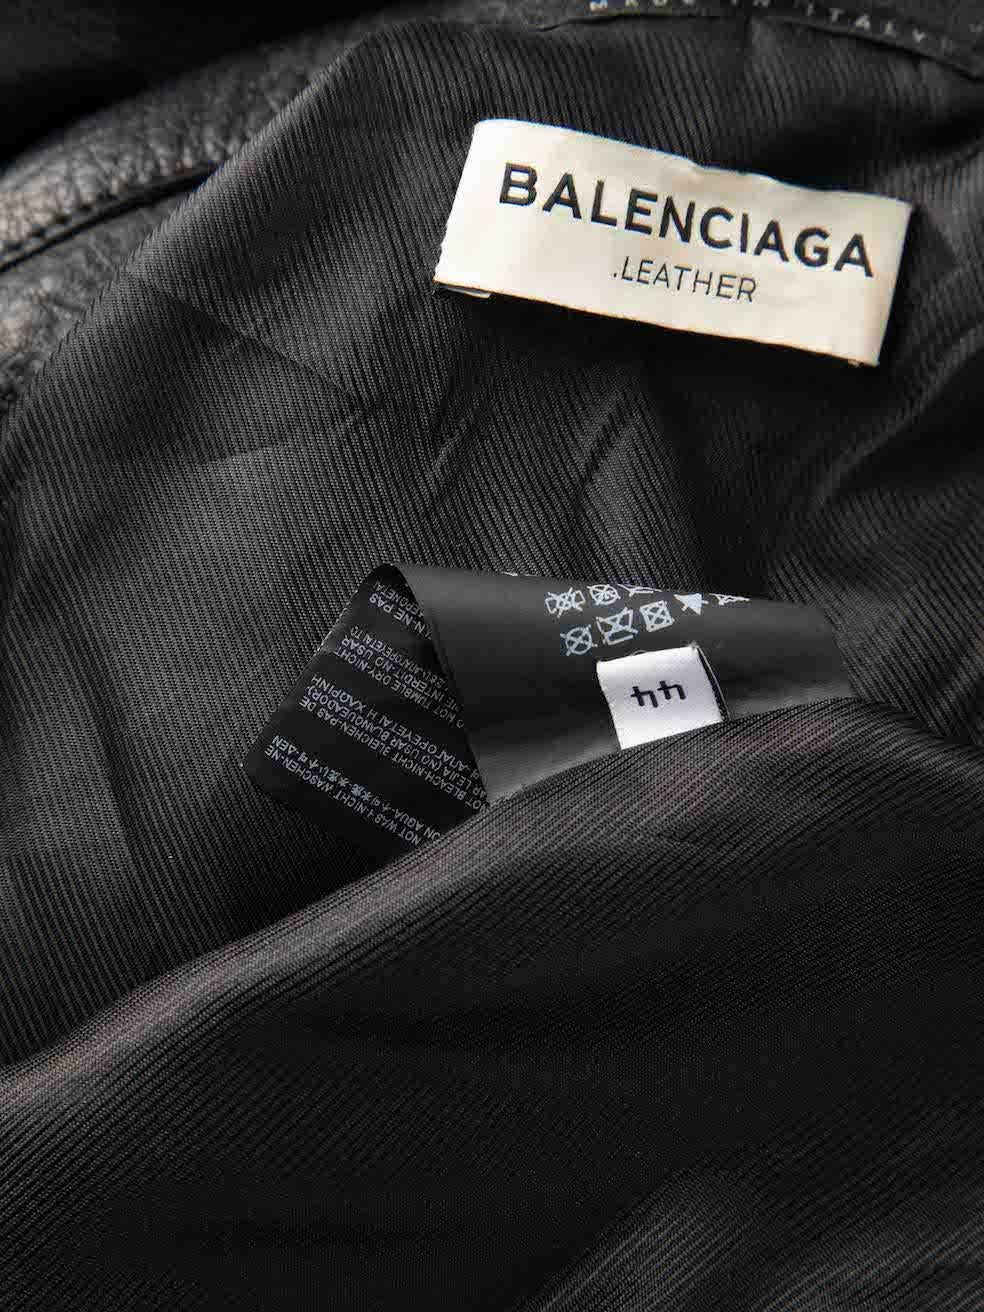 Balenciaga Black Leather Jacket Size XXL For Sale 3